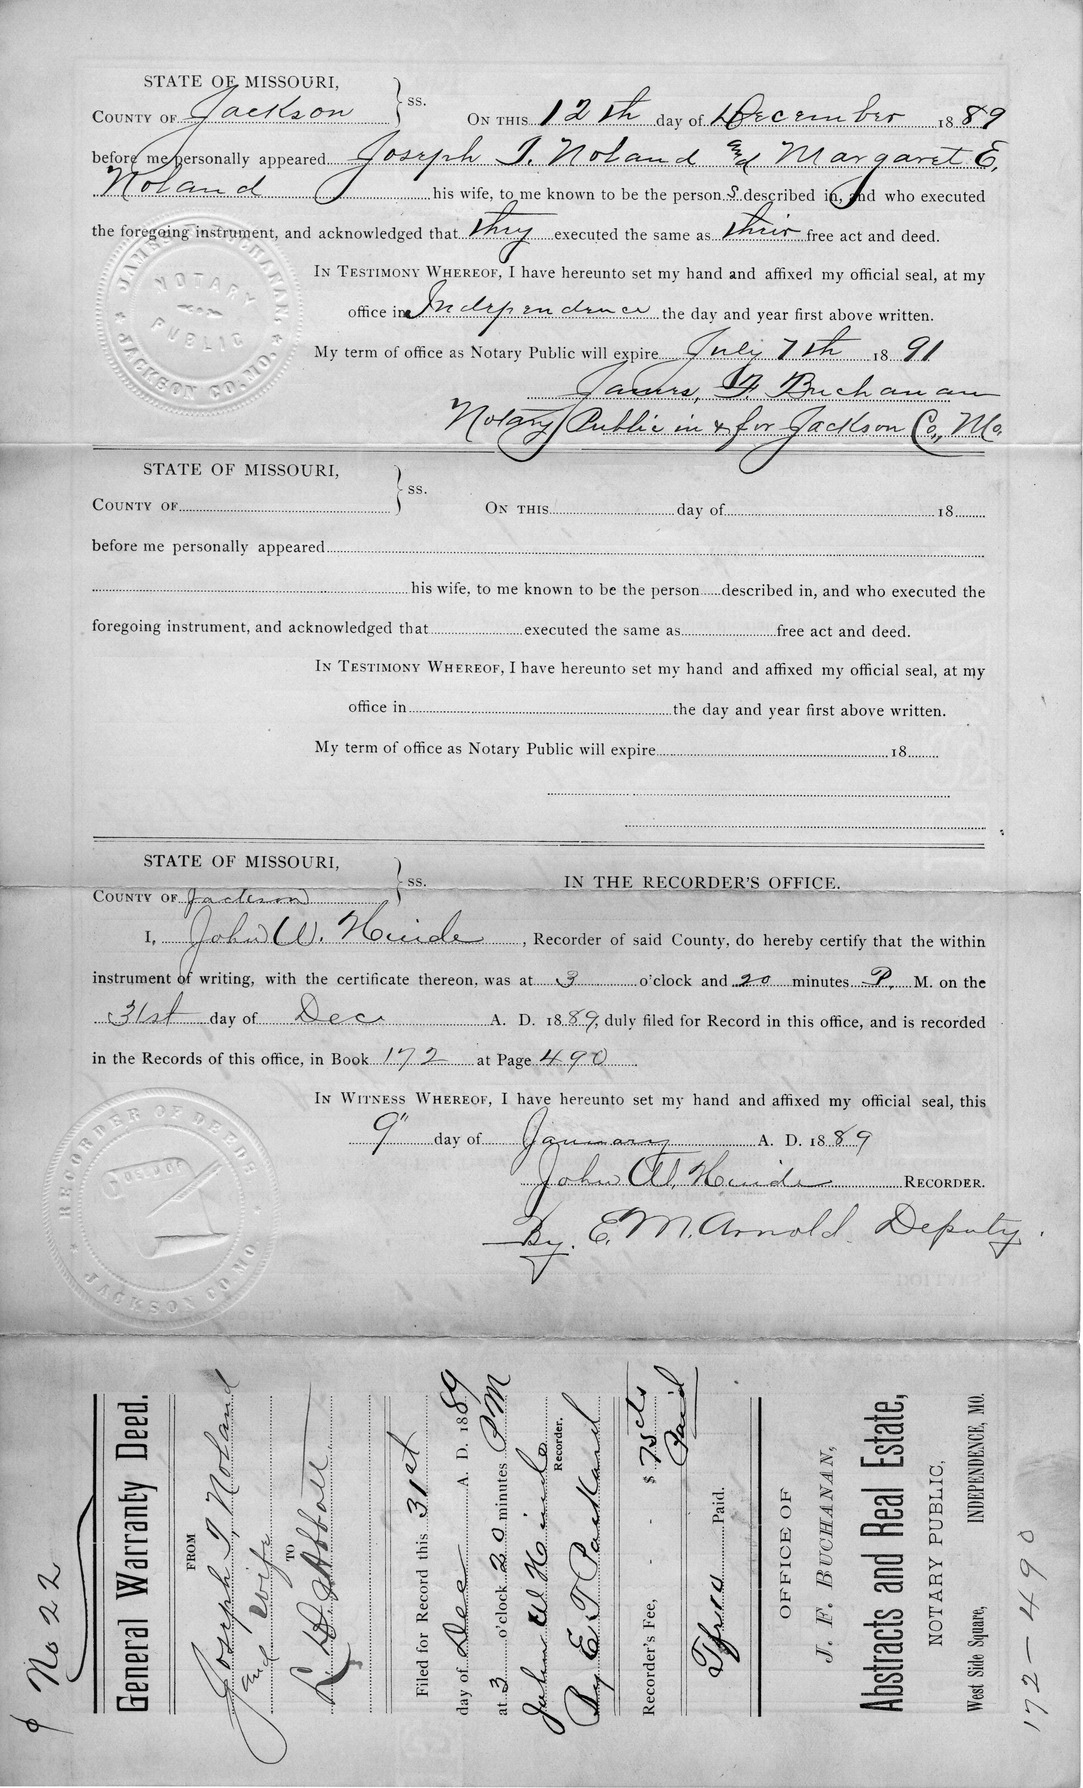 General Warranty Deed from Joseph T. Noland and Margaret E. Noland to L. F. Abbott